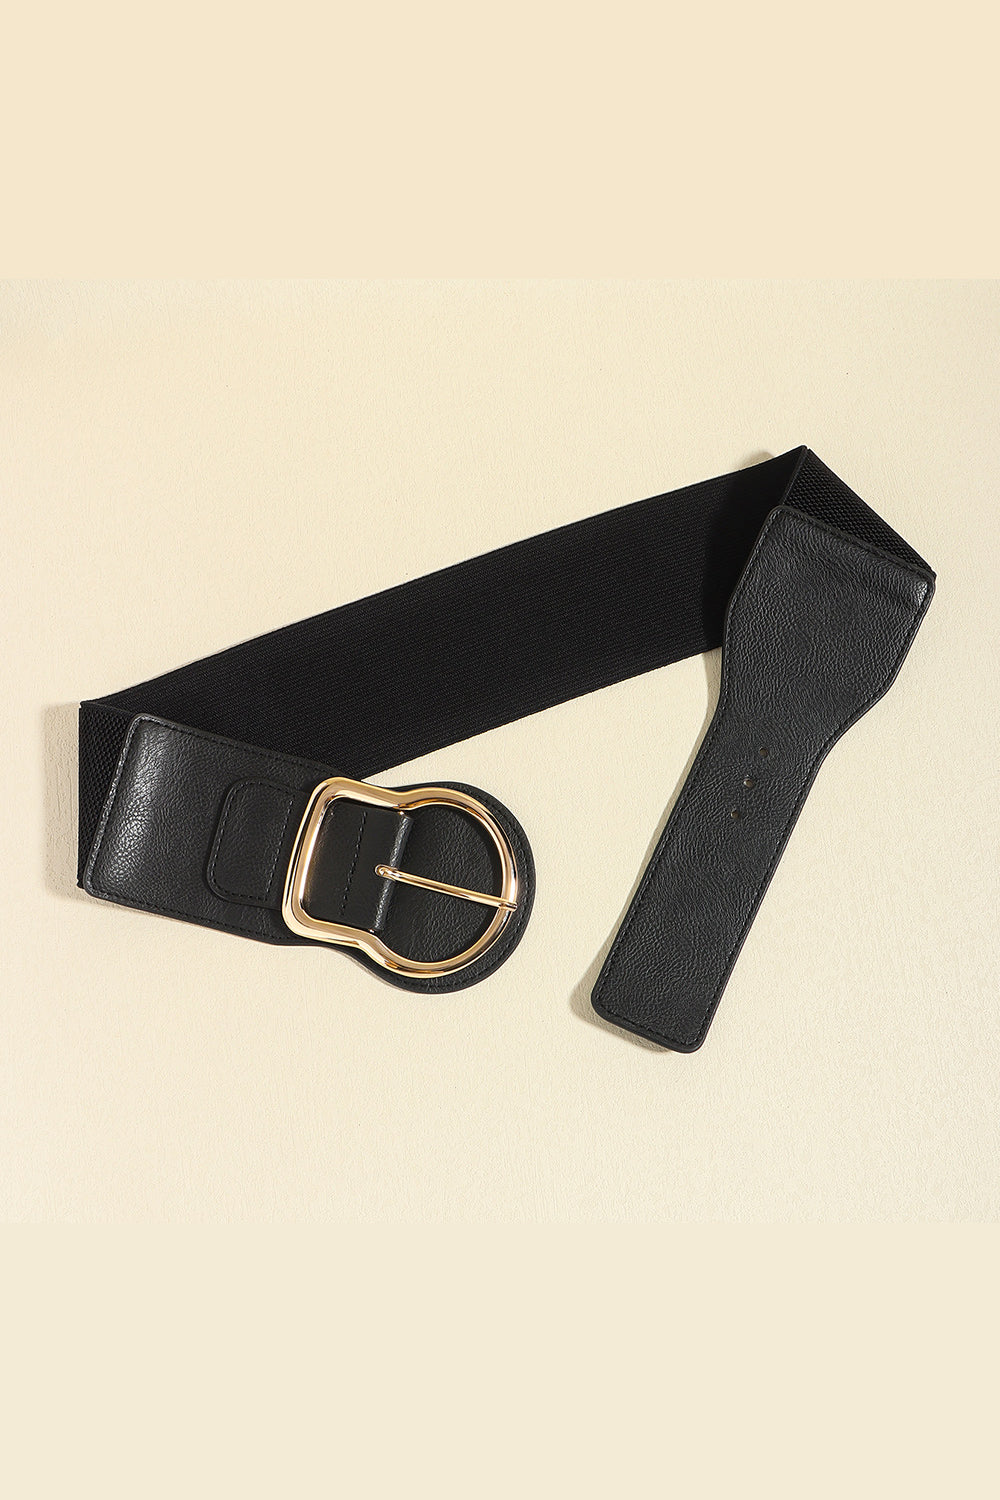 Zinc Alloy PU Leather Belt